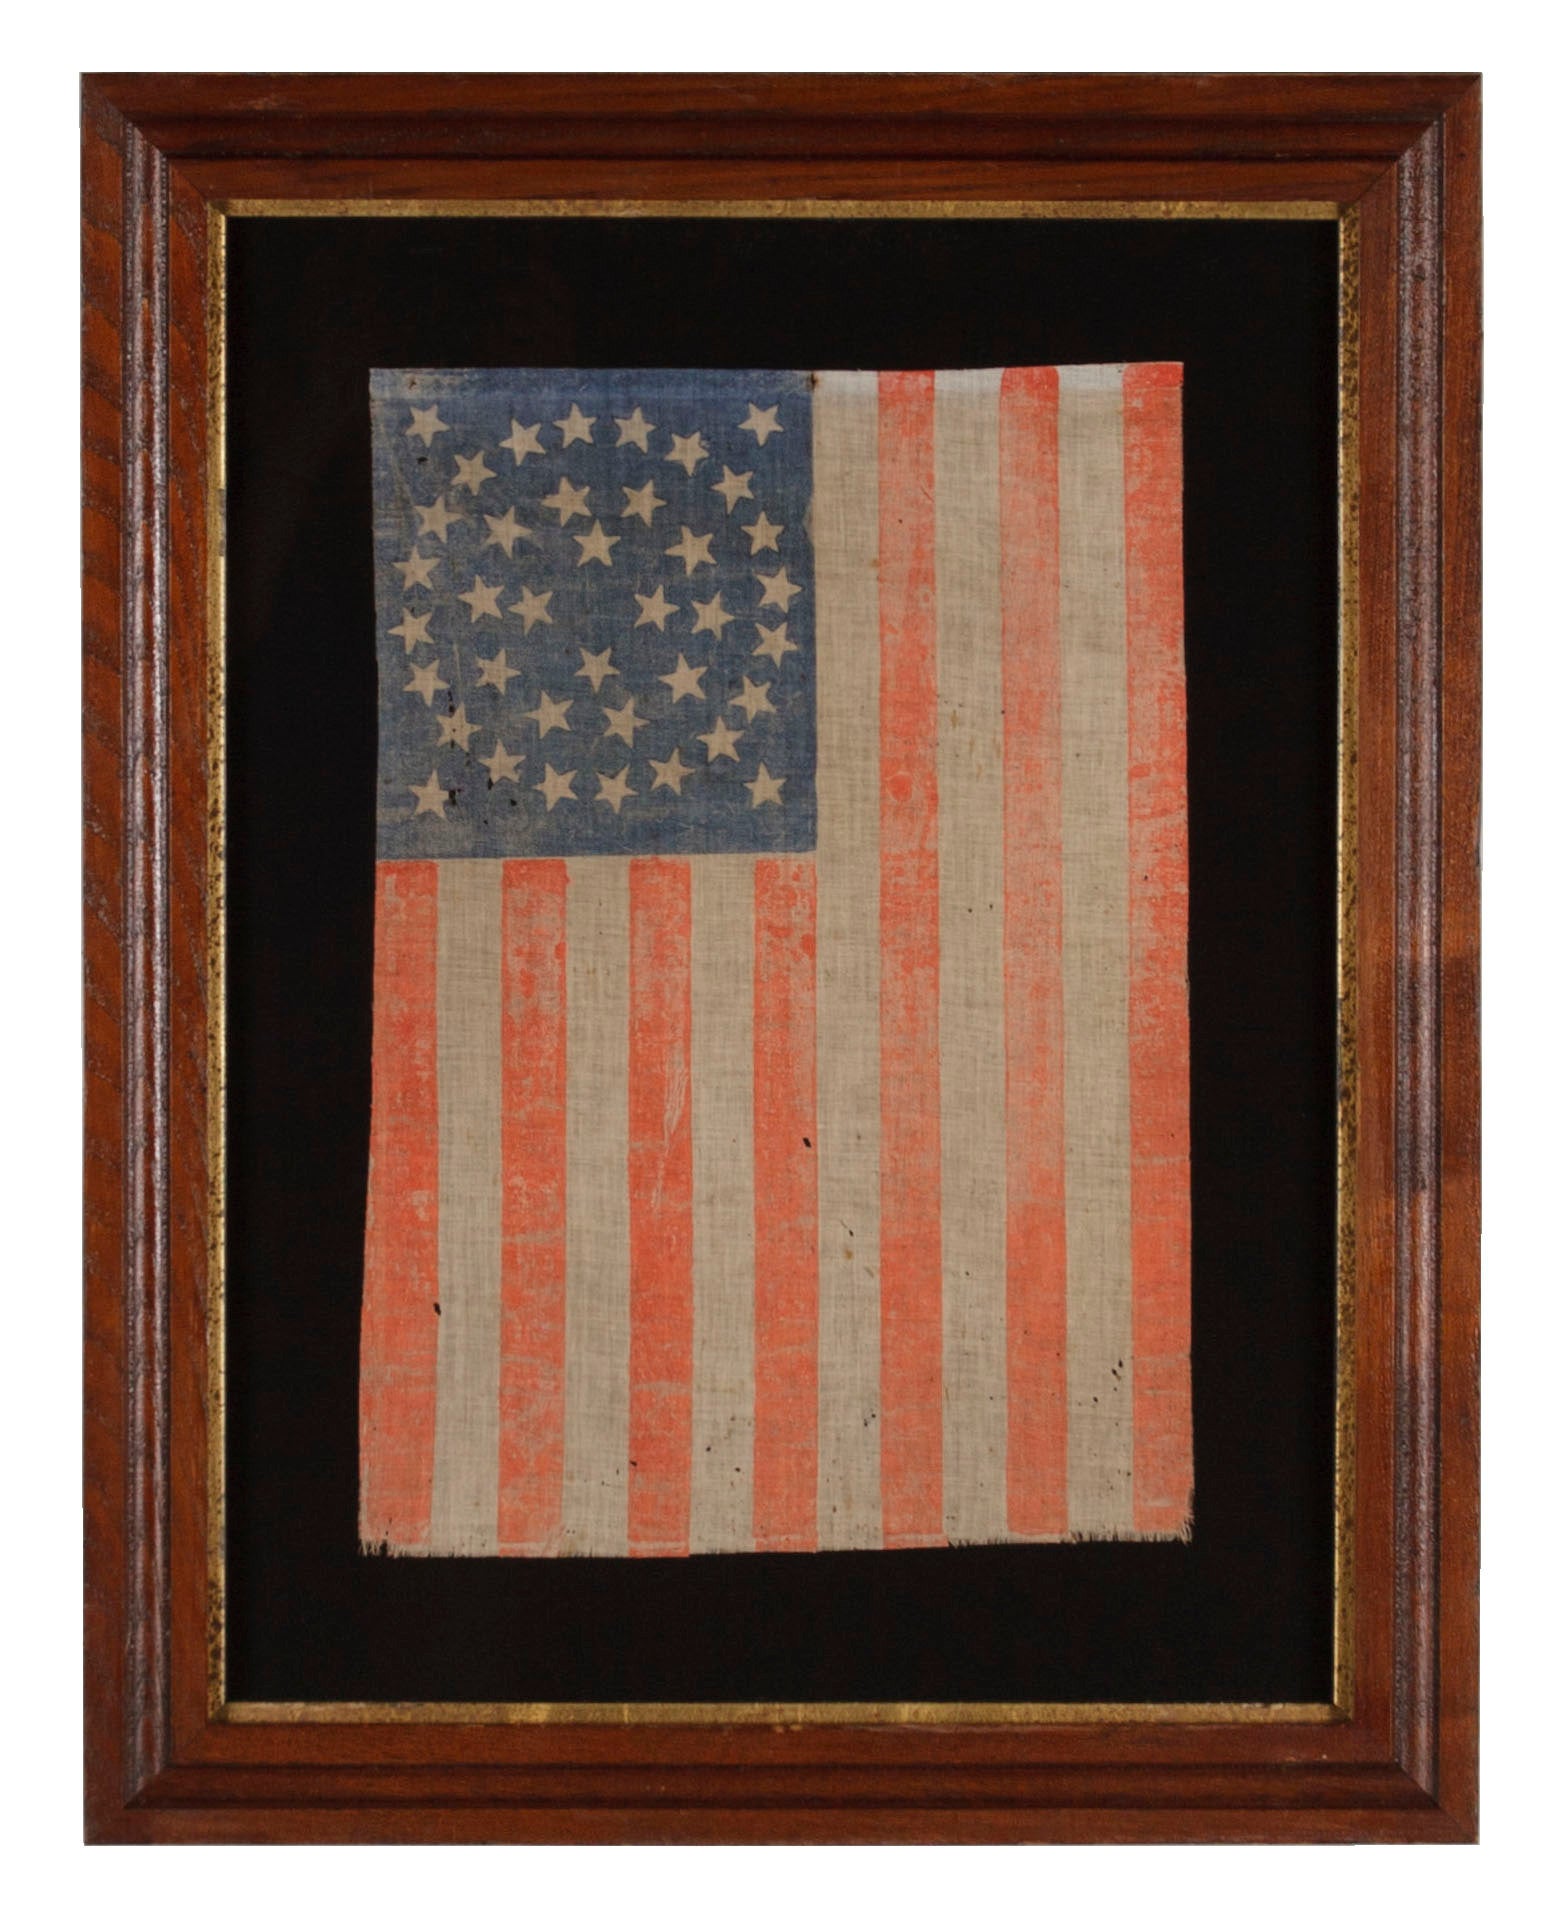 38 Star Antique American Flag, Rare Medallion Variation, Colorado Statehood